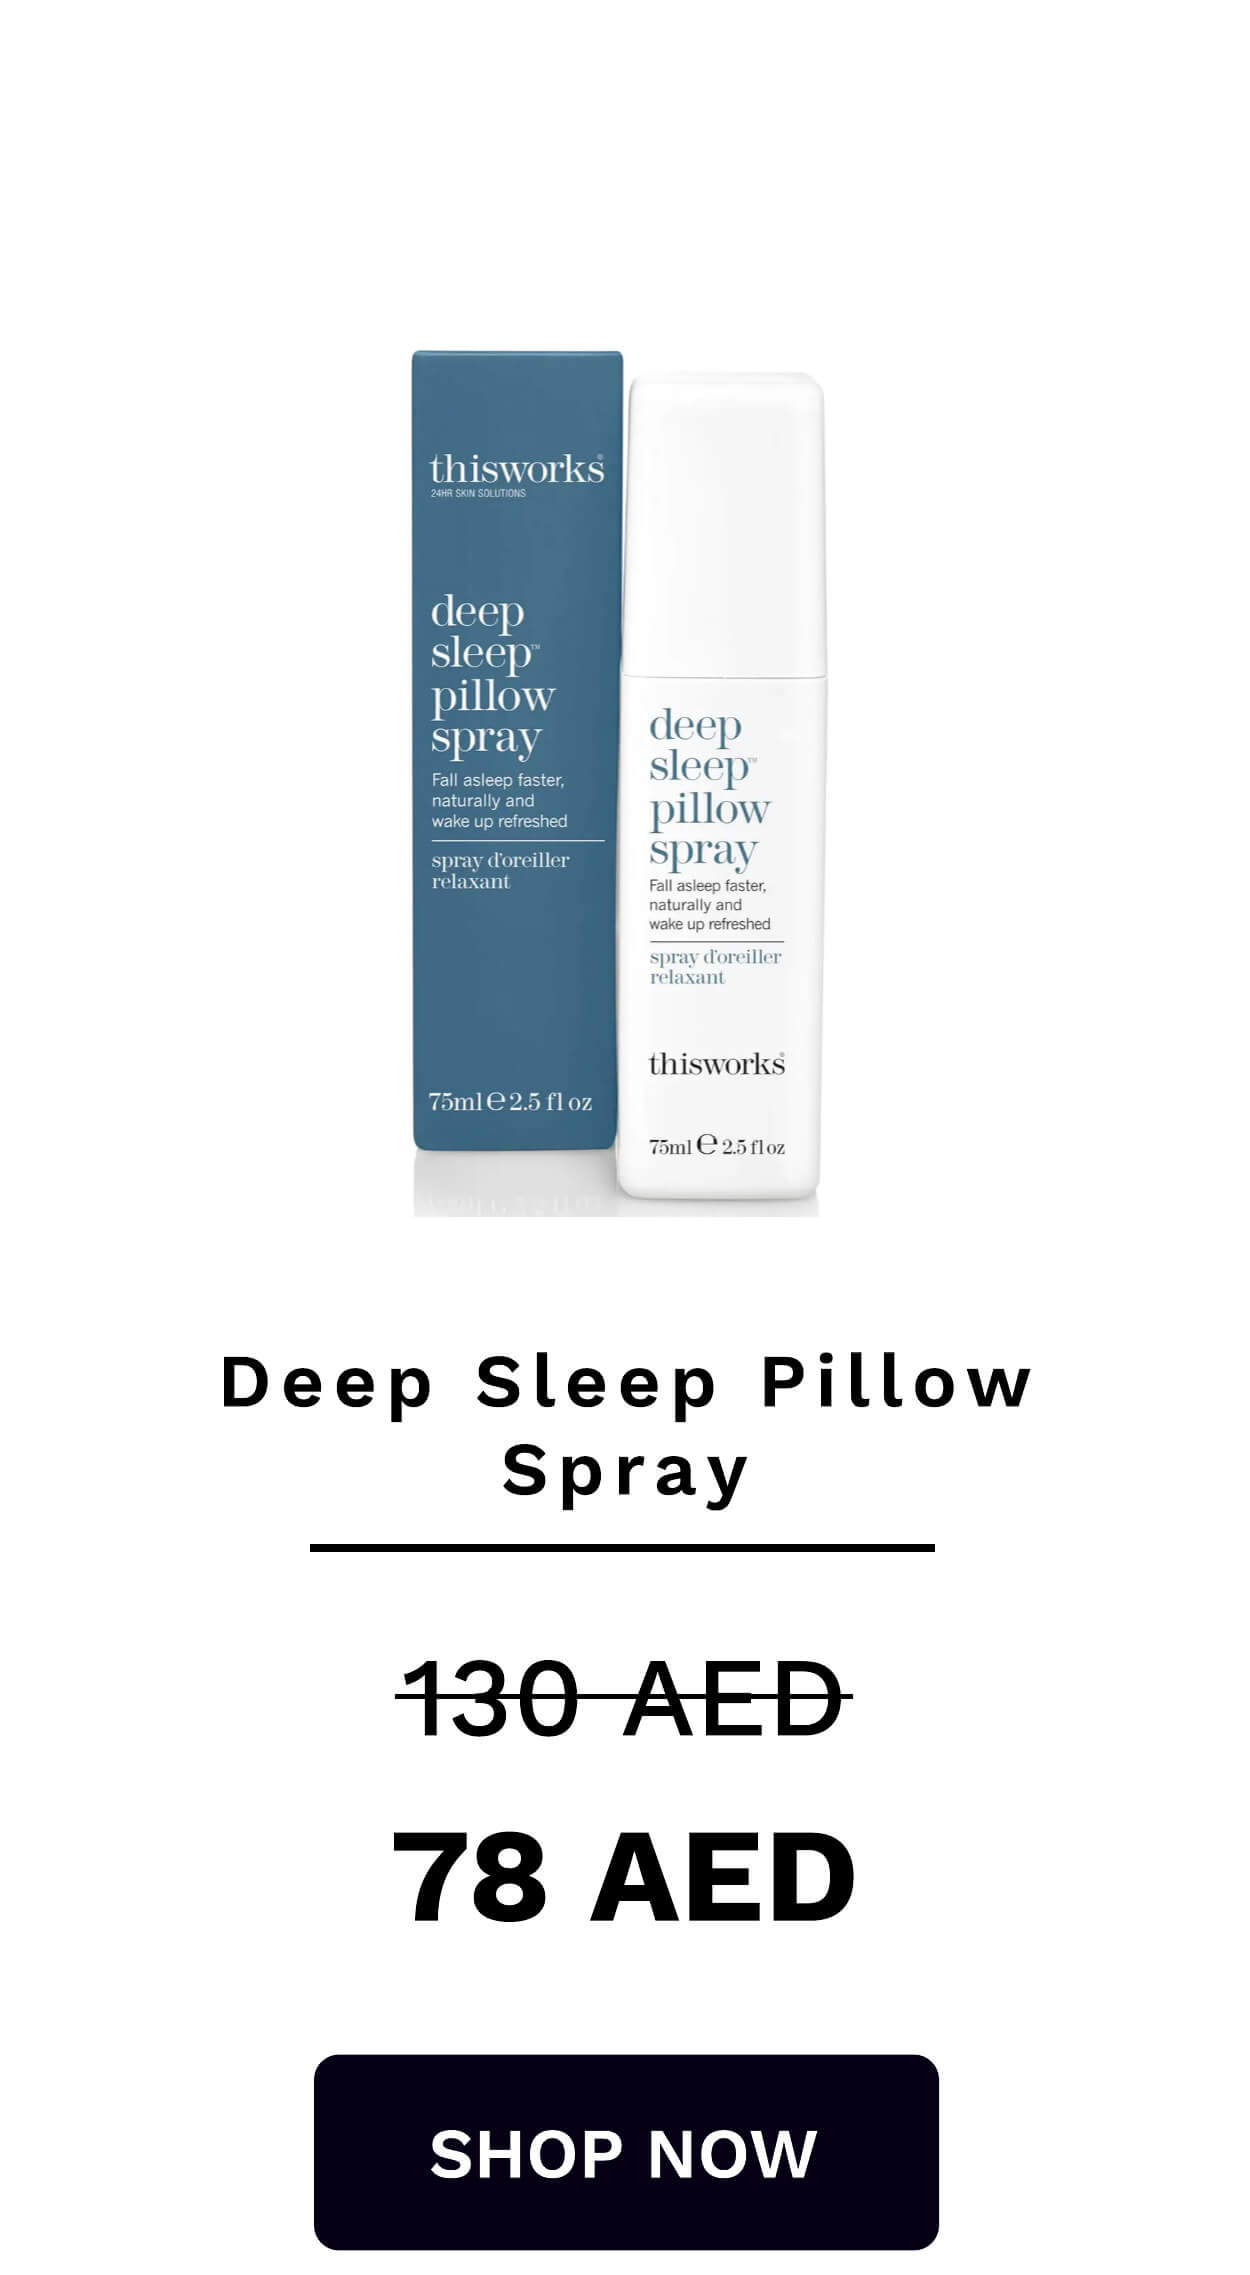 IS deep sleep pillow spray deep . sleep pillow spray doreiller JEREb el thisworks SRR 75ml 2510z Deep Sleep Pillow Spray 136-AED 78 AED SHOP NOW 